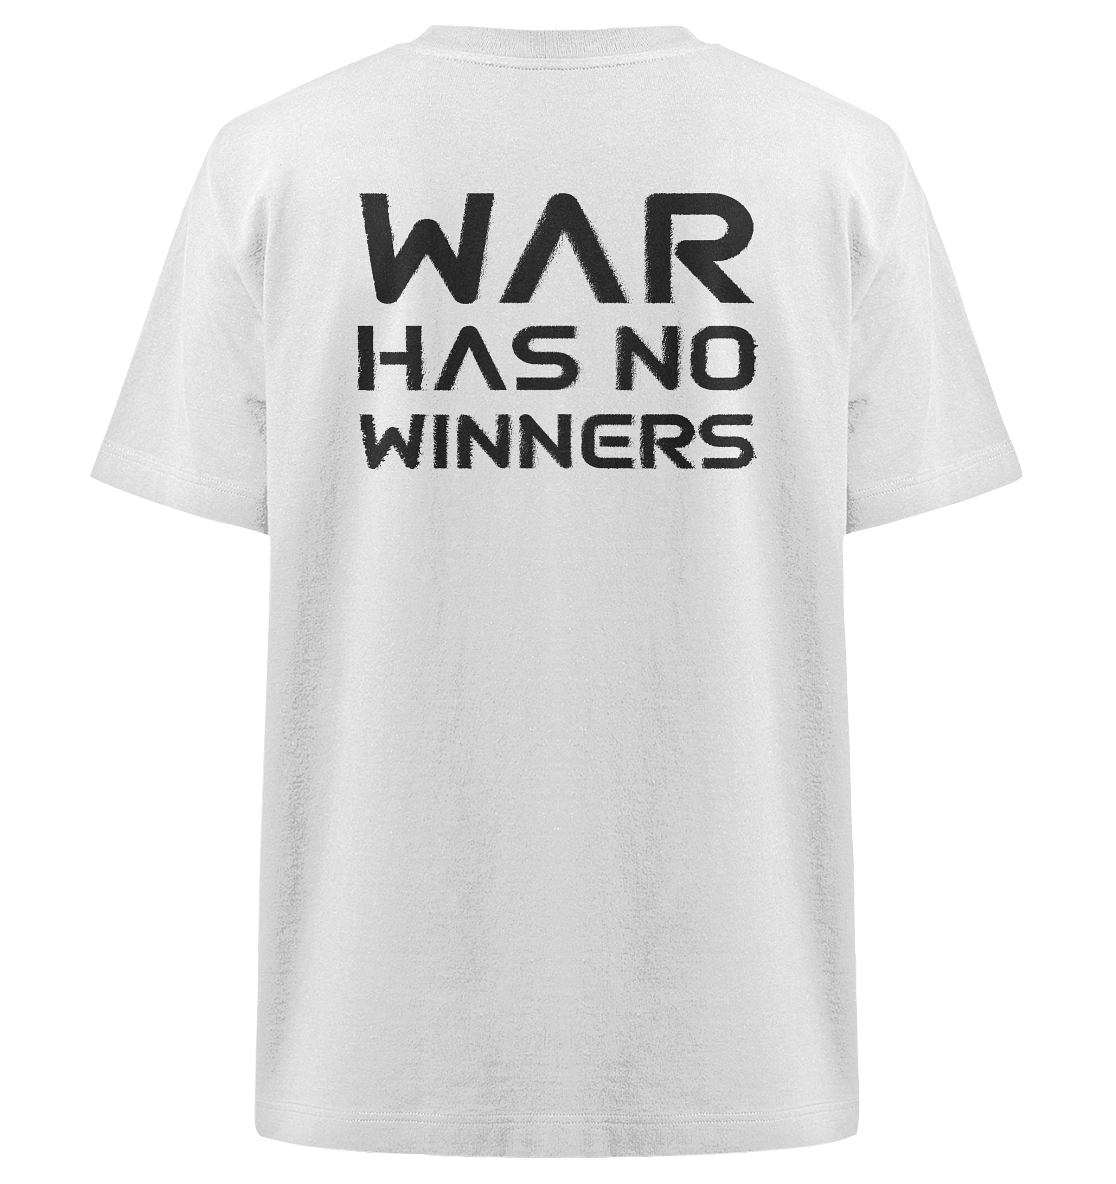 Loose Fit T-Shirt - "War has no winners" - Heavy Oversized Organic Shirt